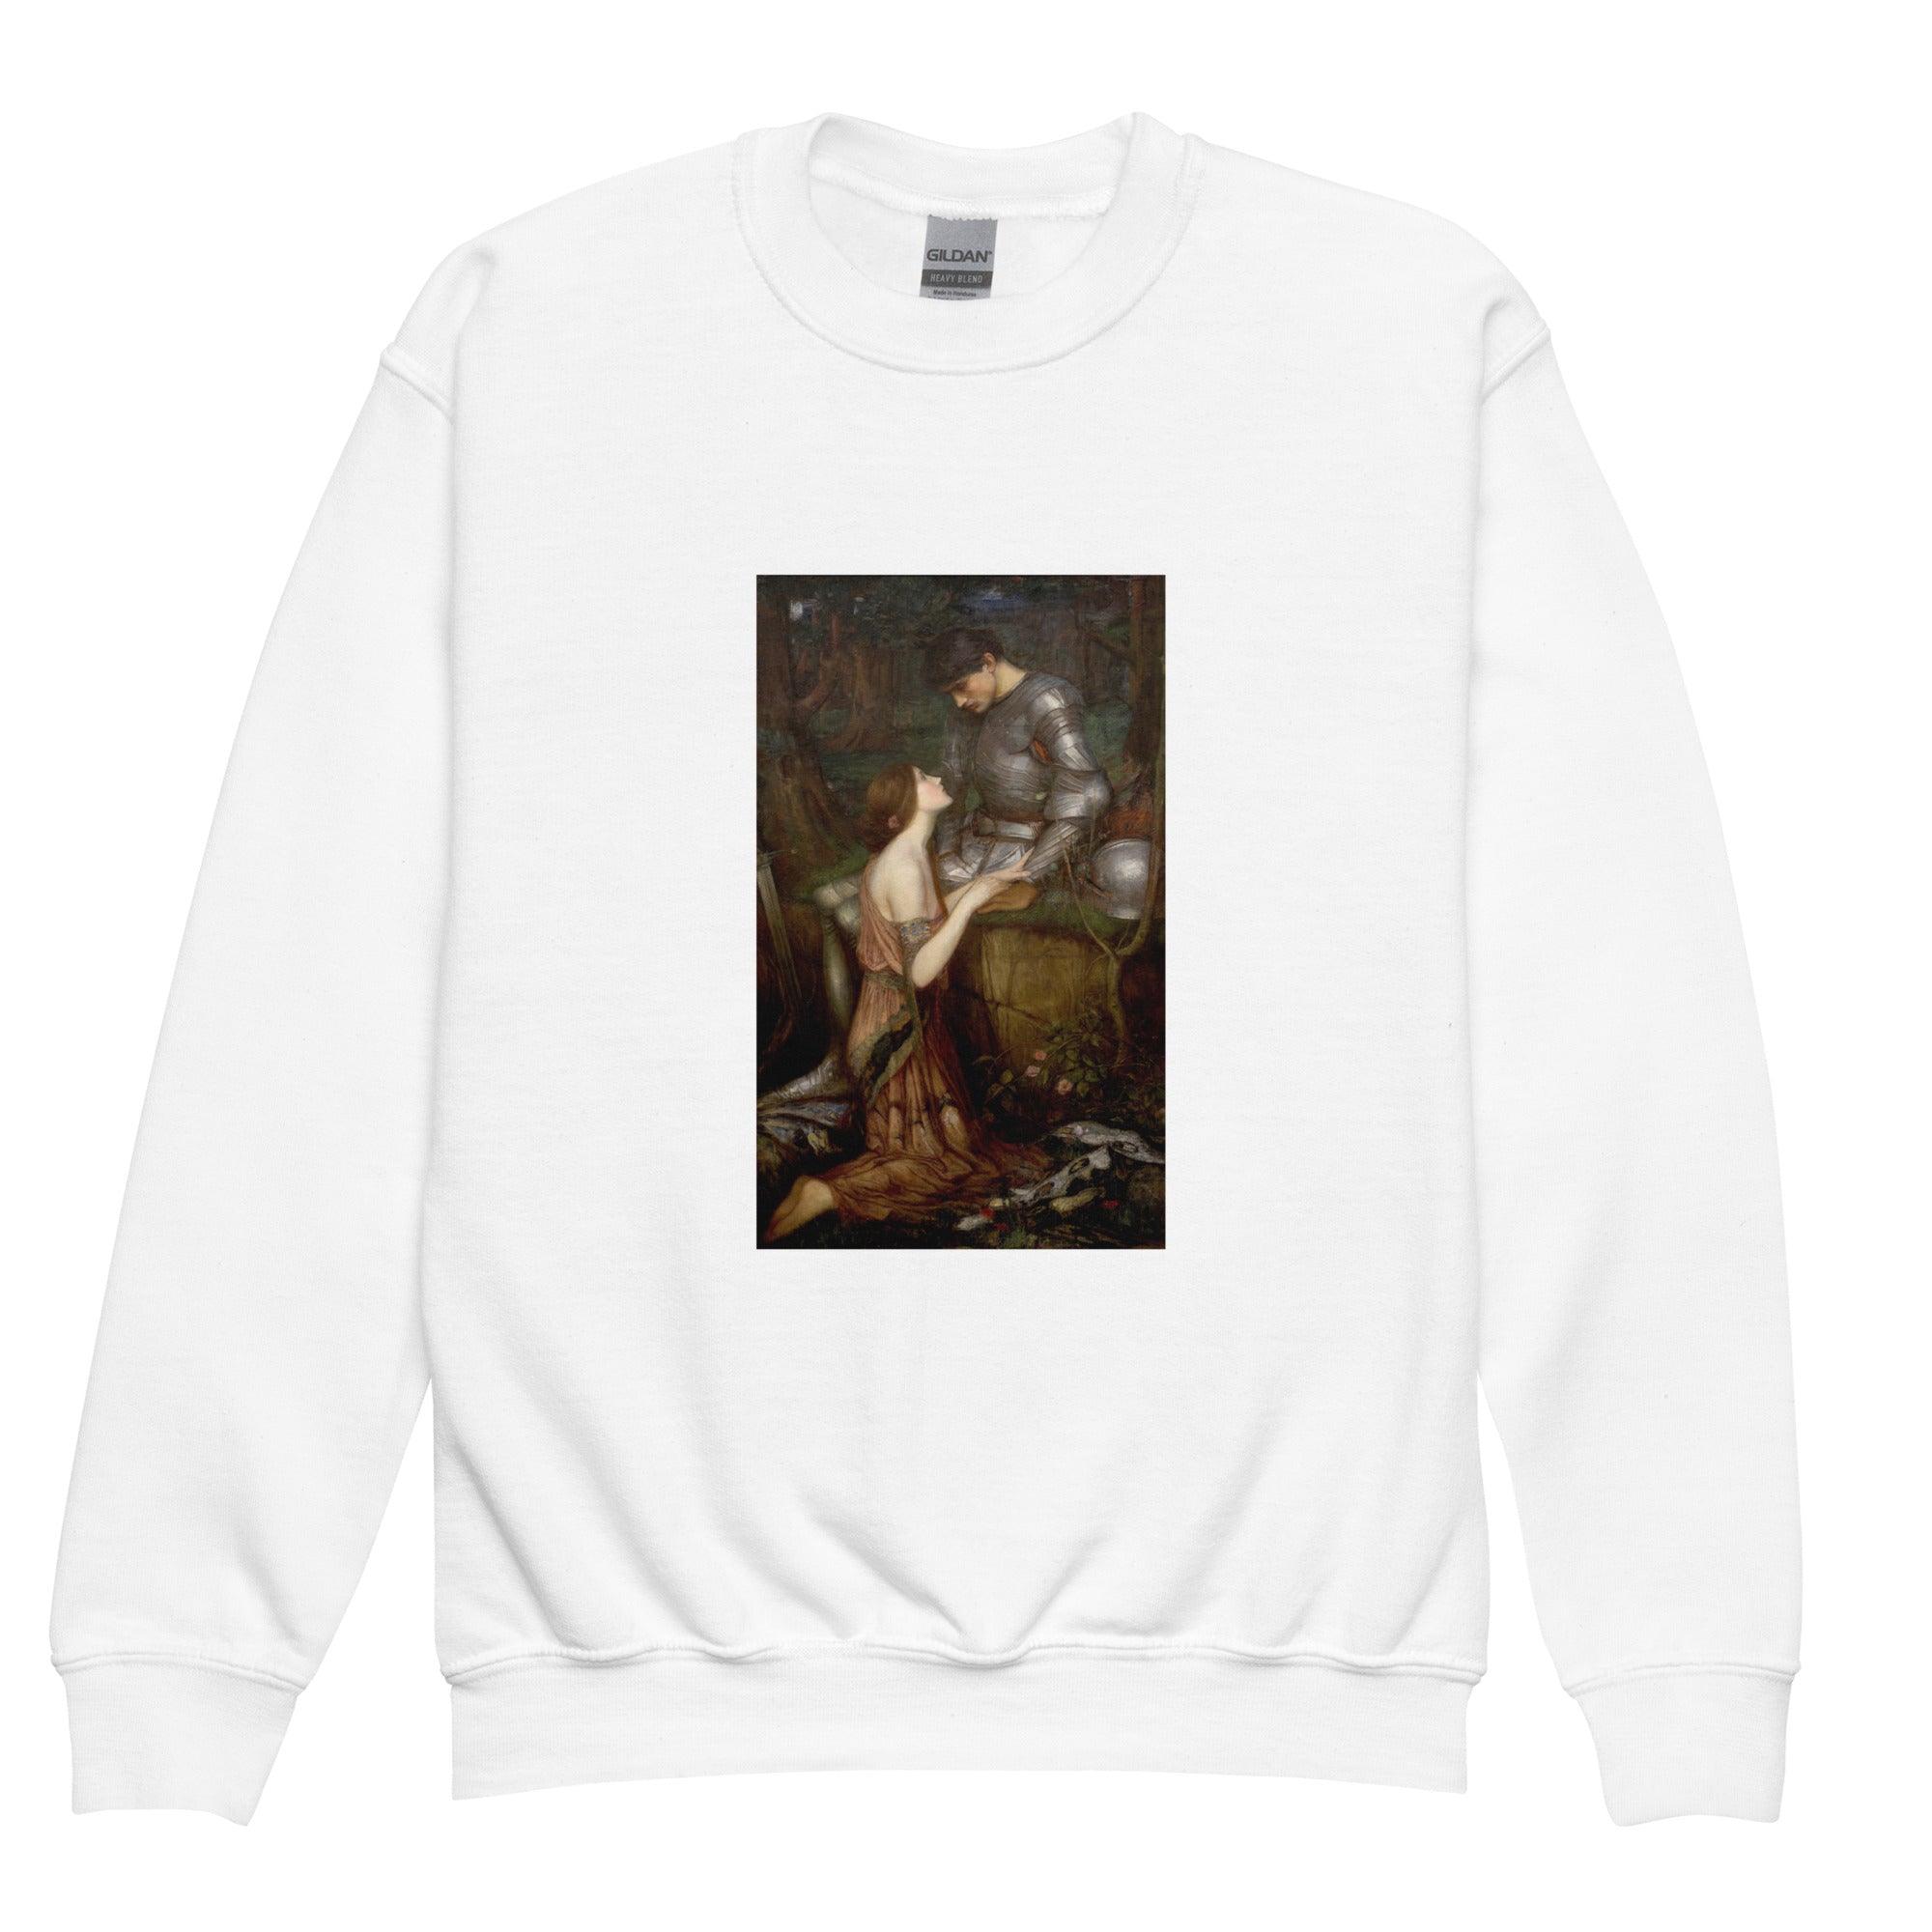 John William Waterhouse 'Lamia' Famous Painting Crewneck Sweatshirt | Premium Youth Art Sweatshirt